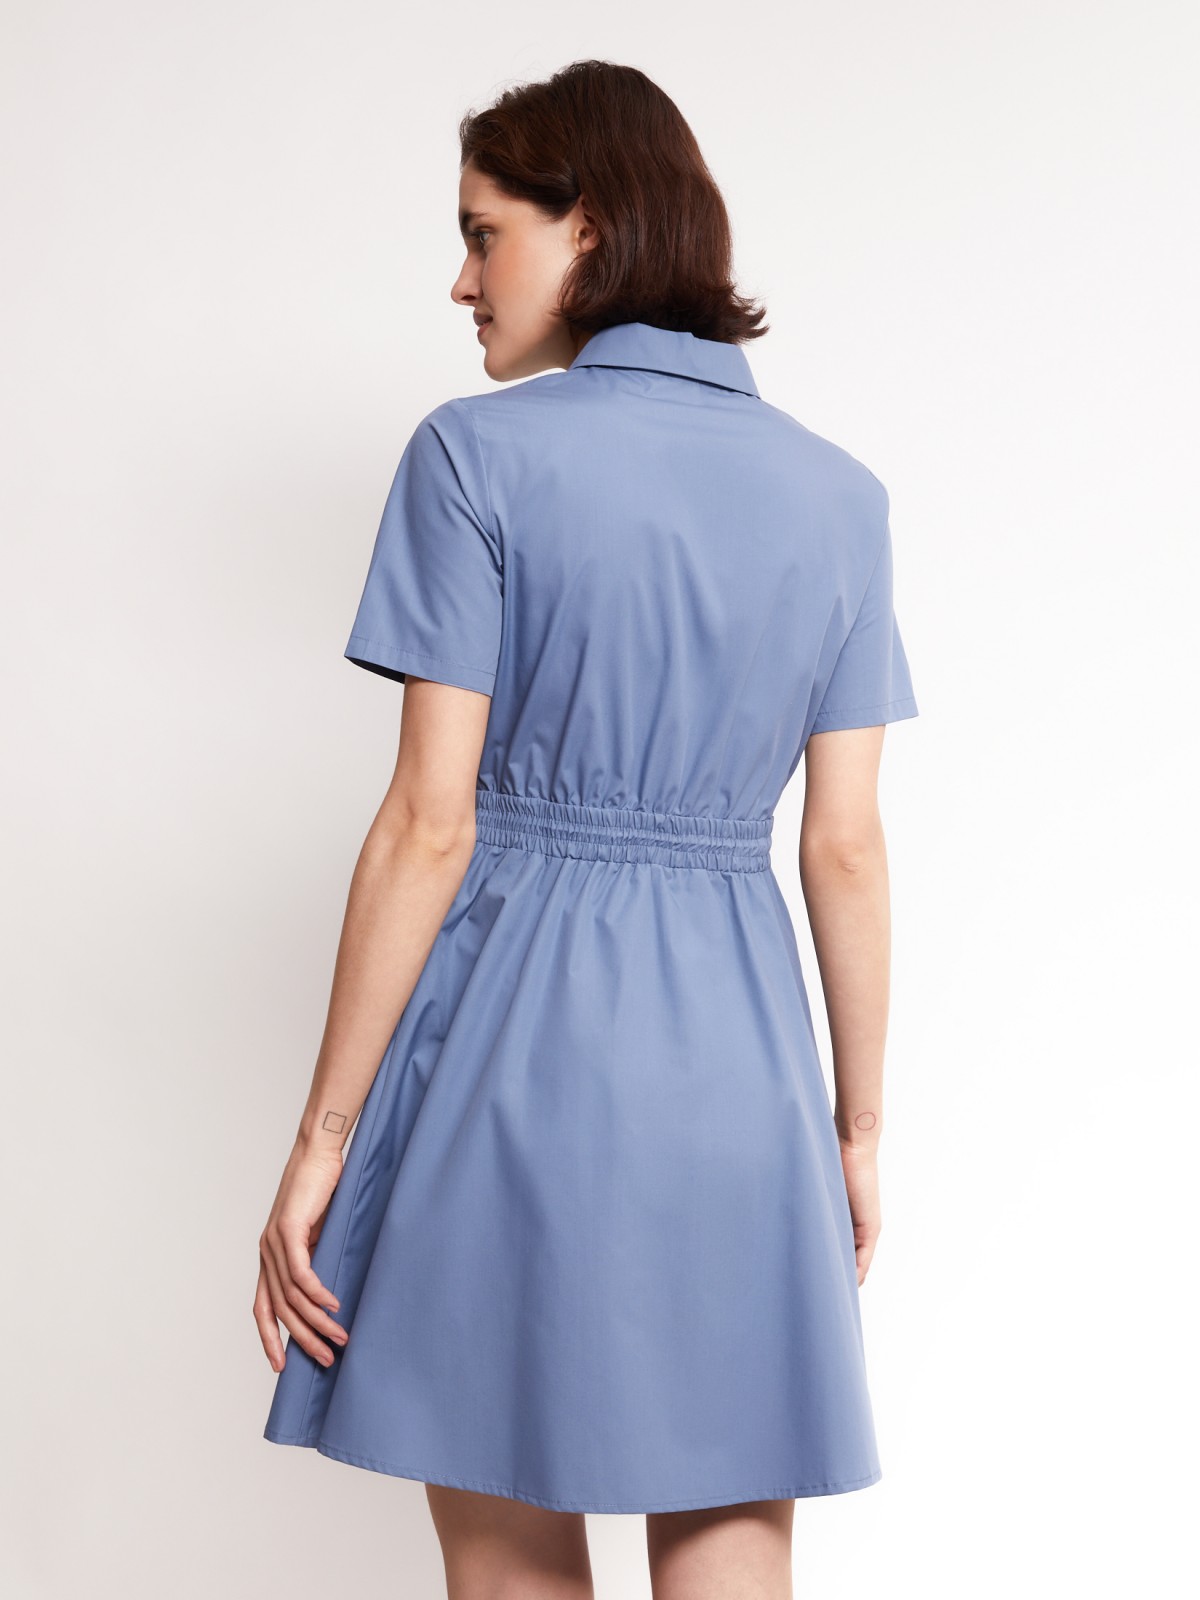 Платье-рубашка zolla 221218259233, цвет голубой, размер XS - фото 5